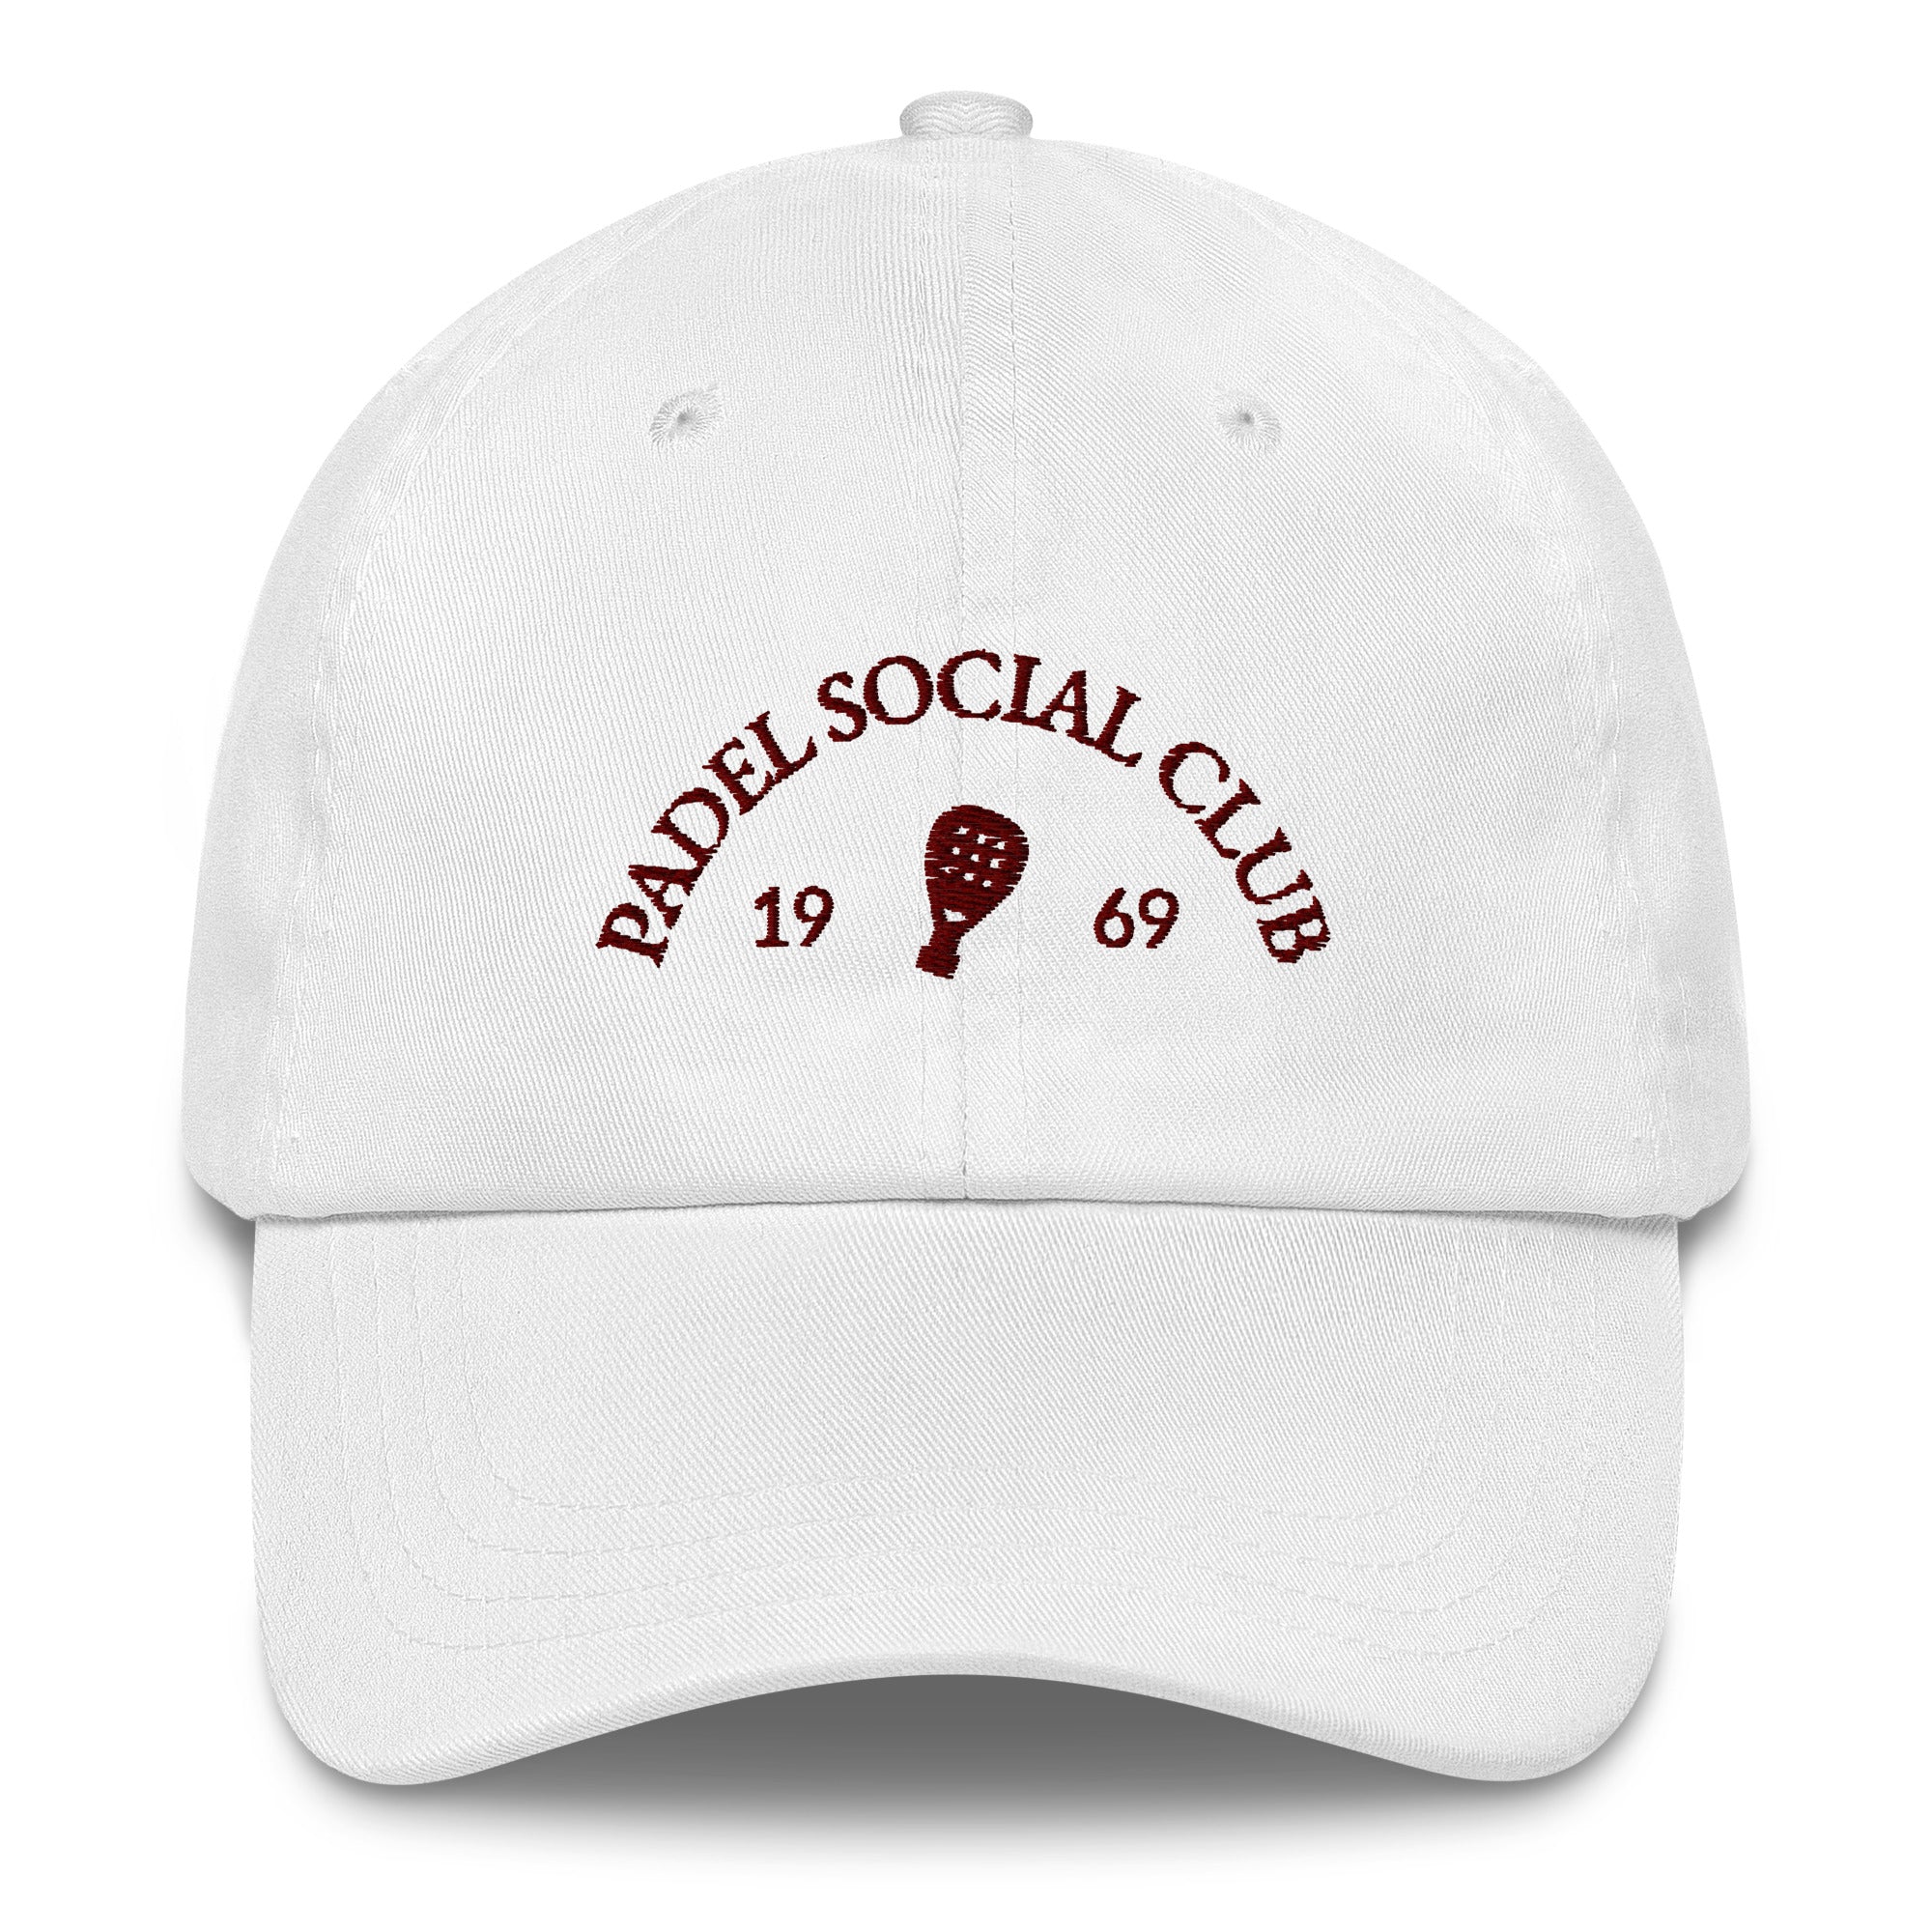 Padel Social Club - Cap